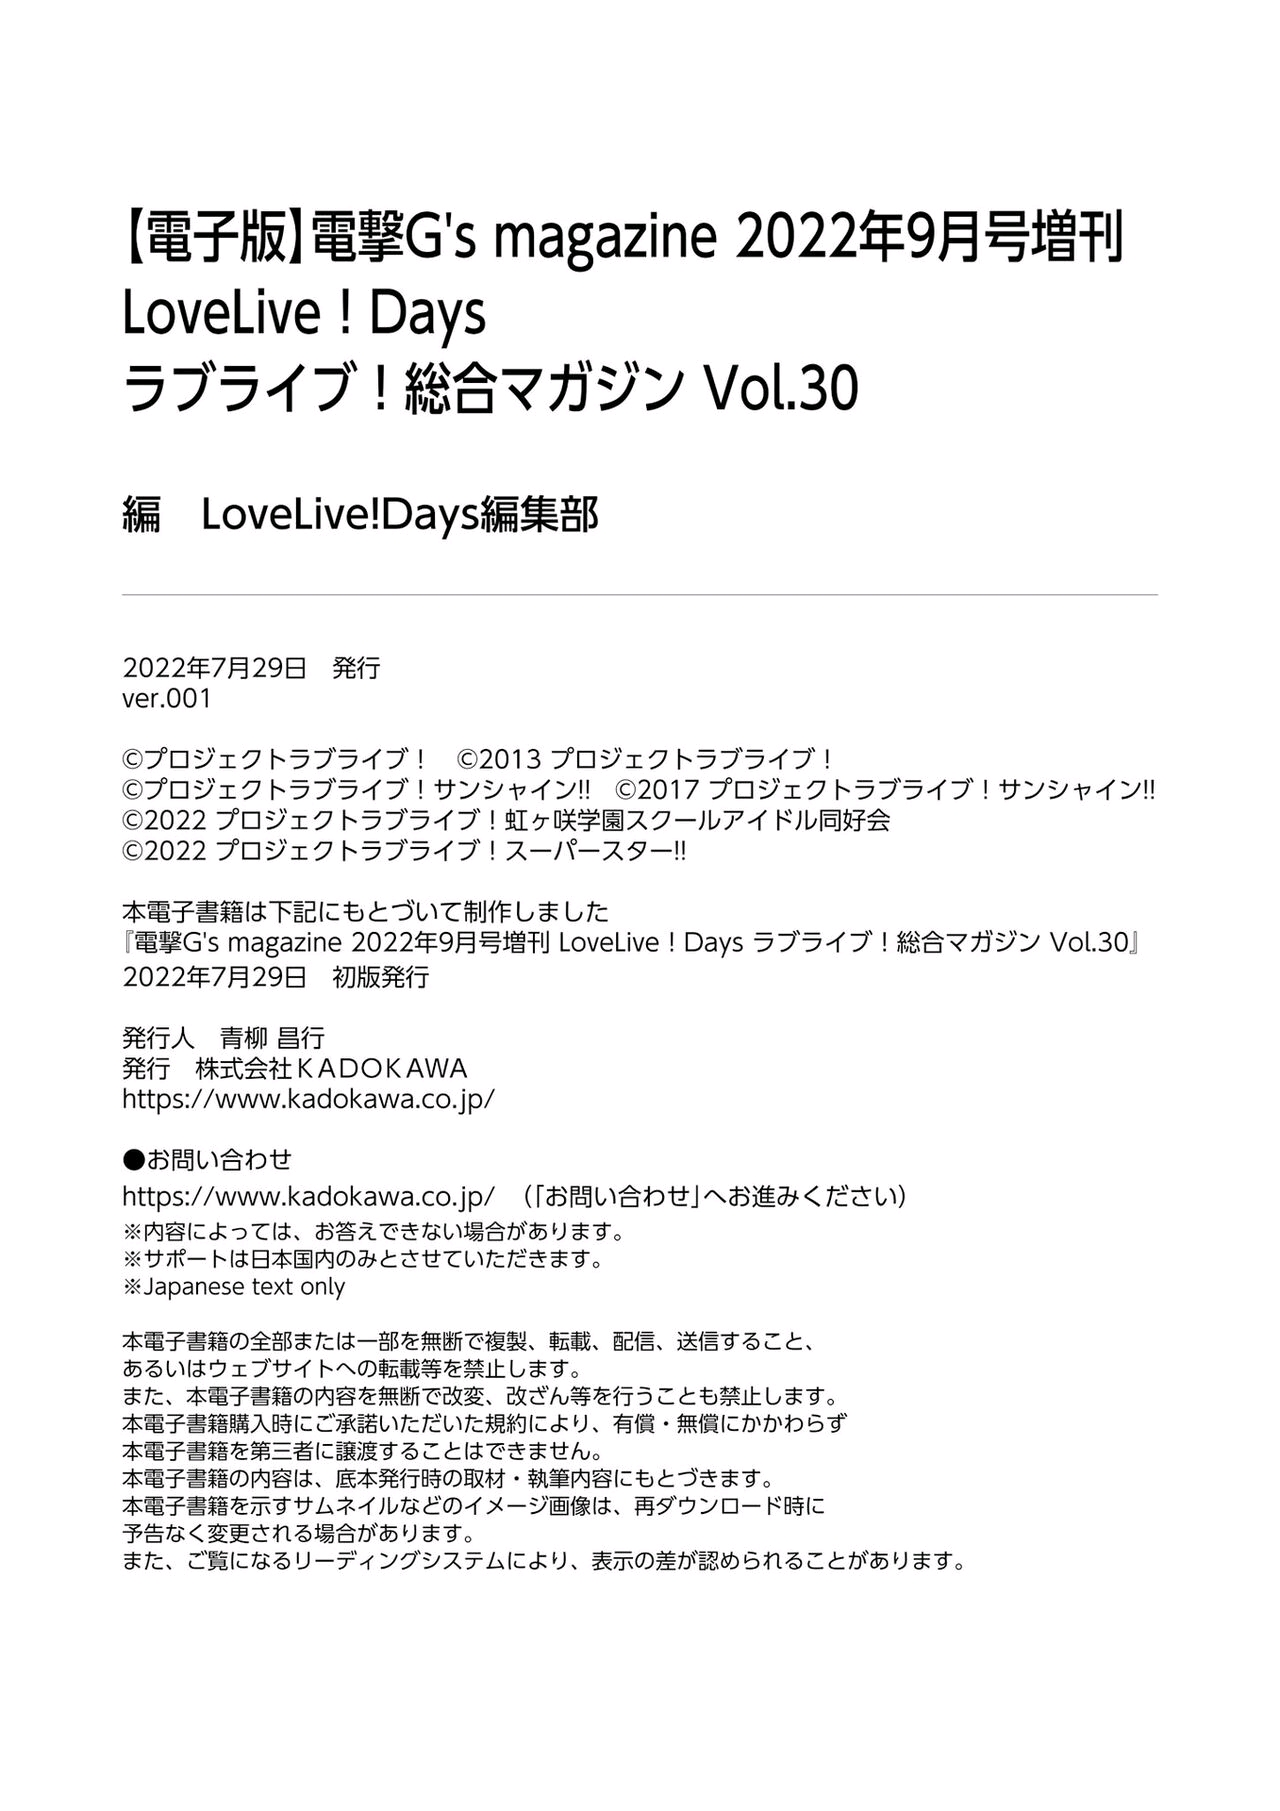 LoveLive!Days ラブライブ!総合マガジン Vol.30（下）